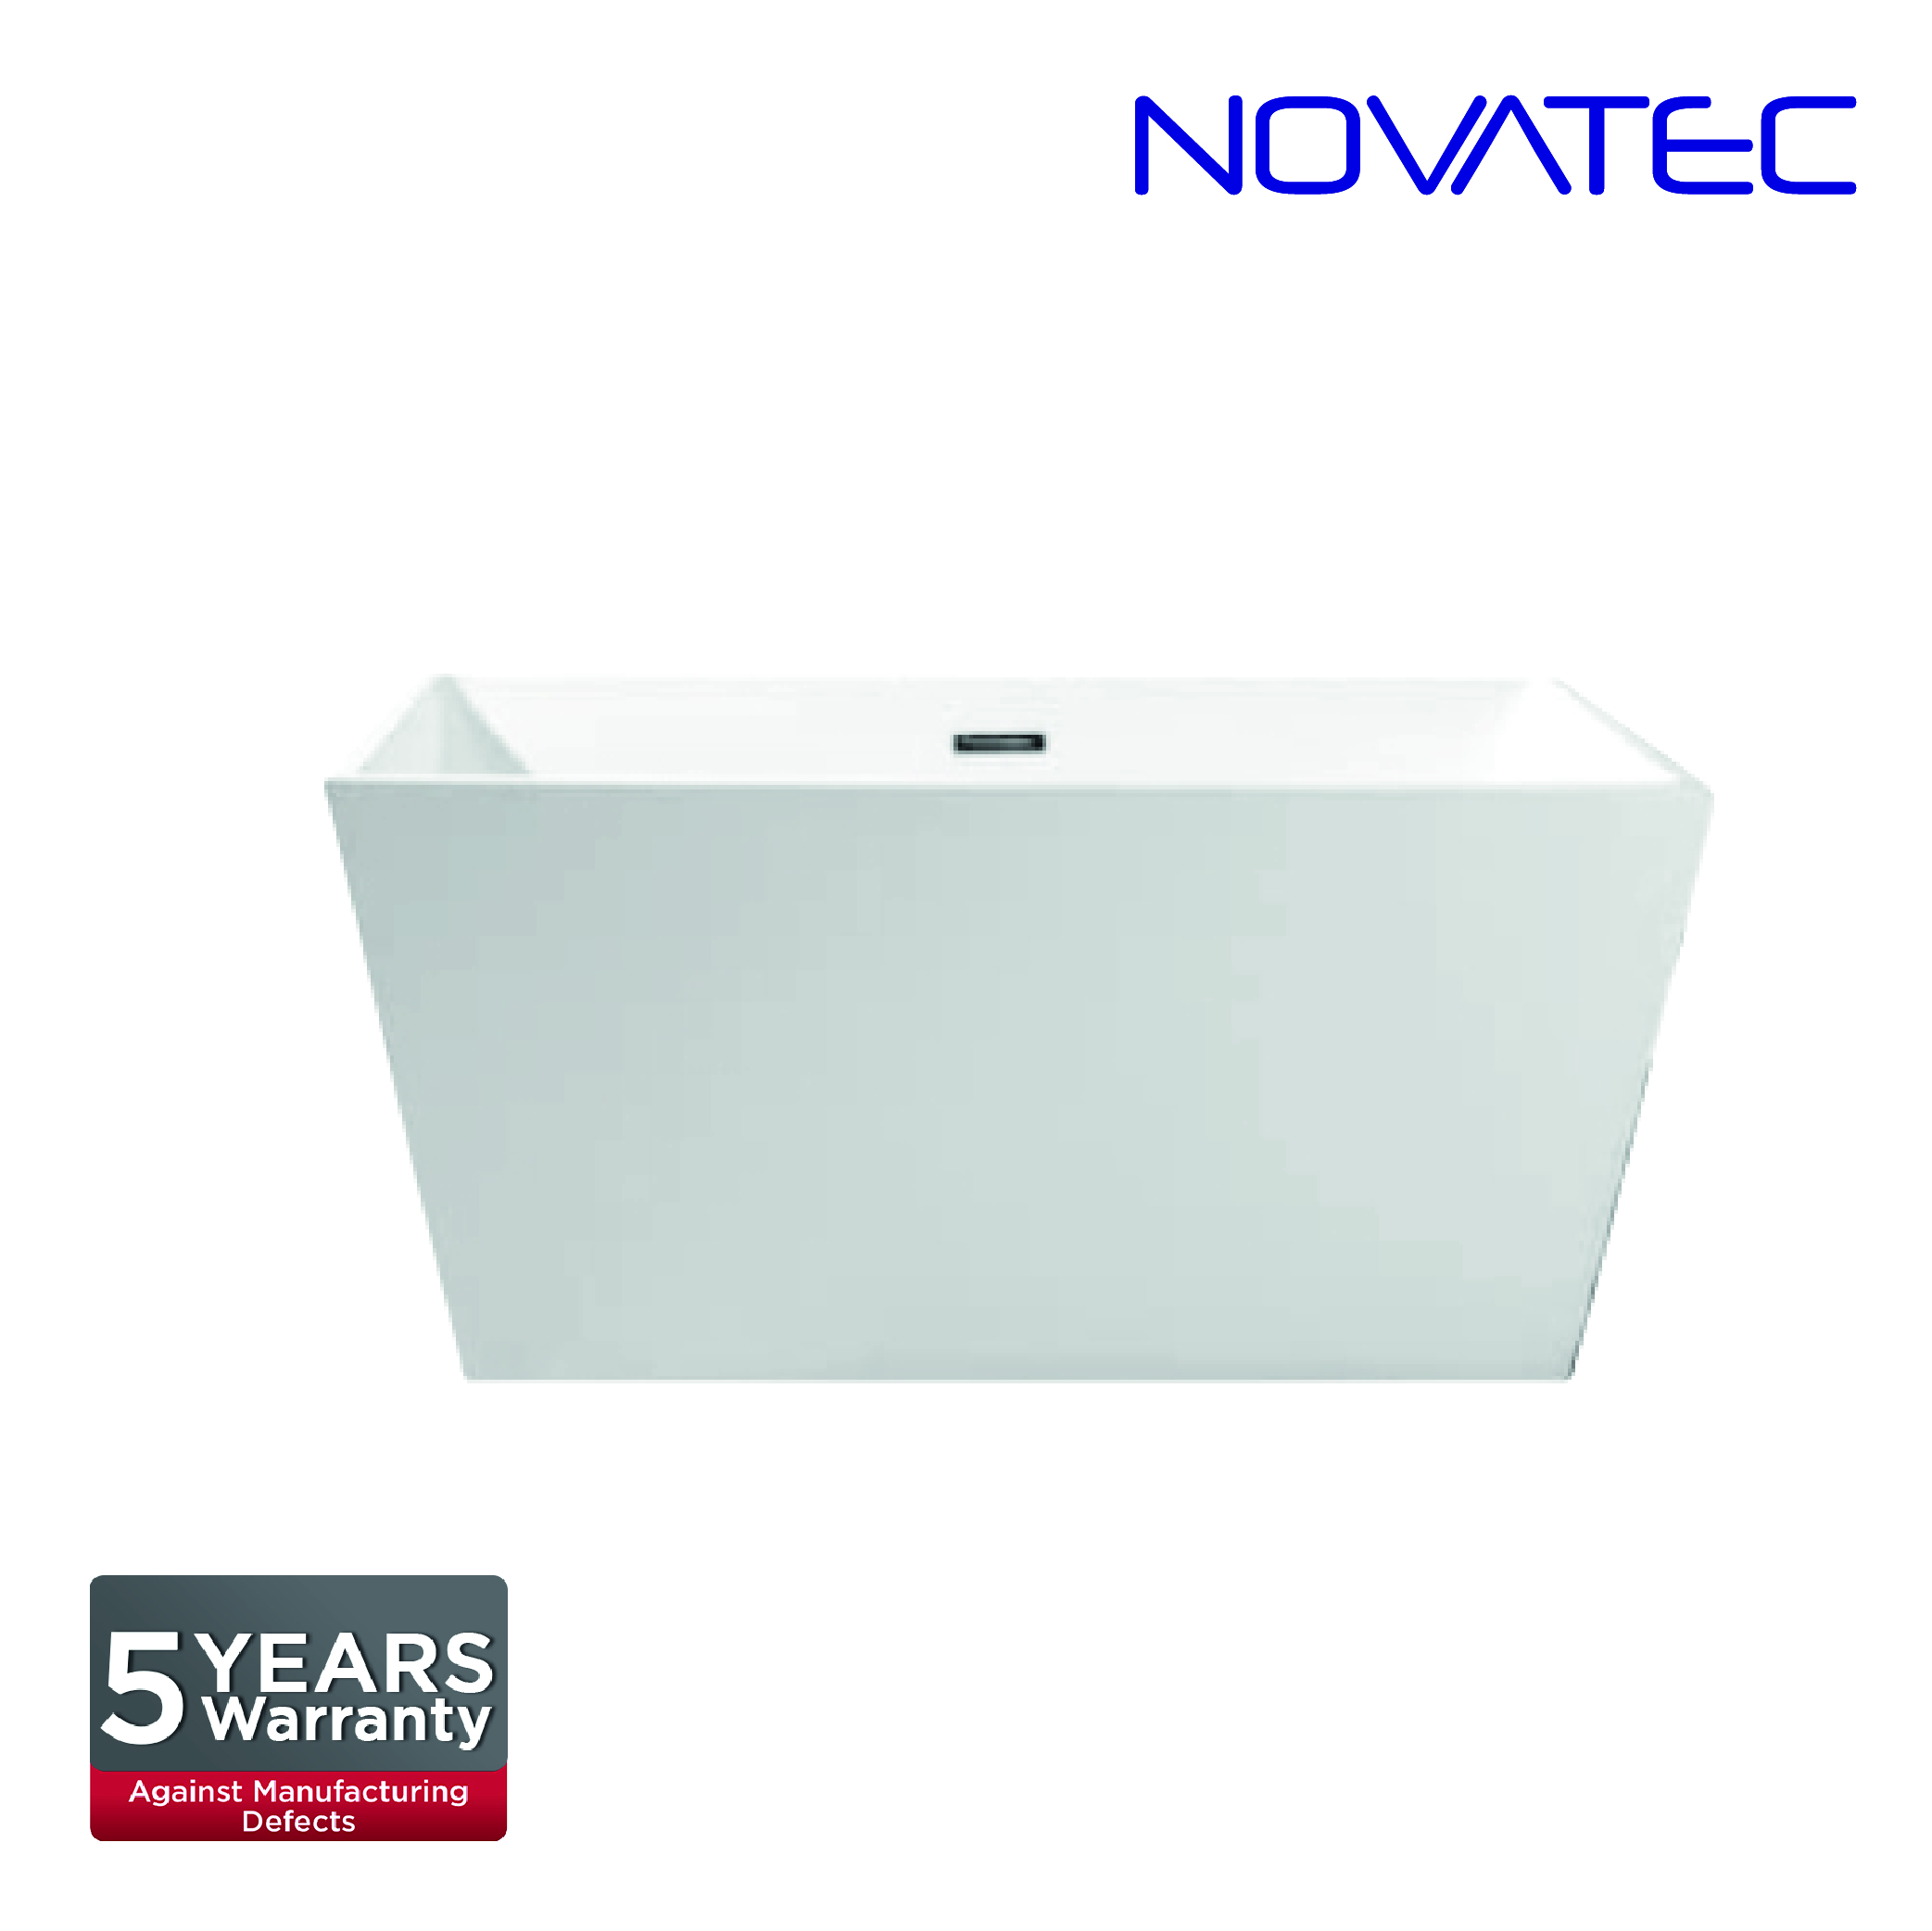 Novatec SW Catania Bath Tub BT 160016B